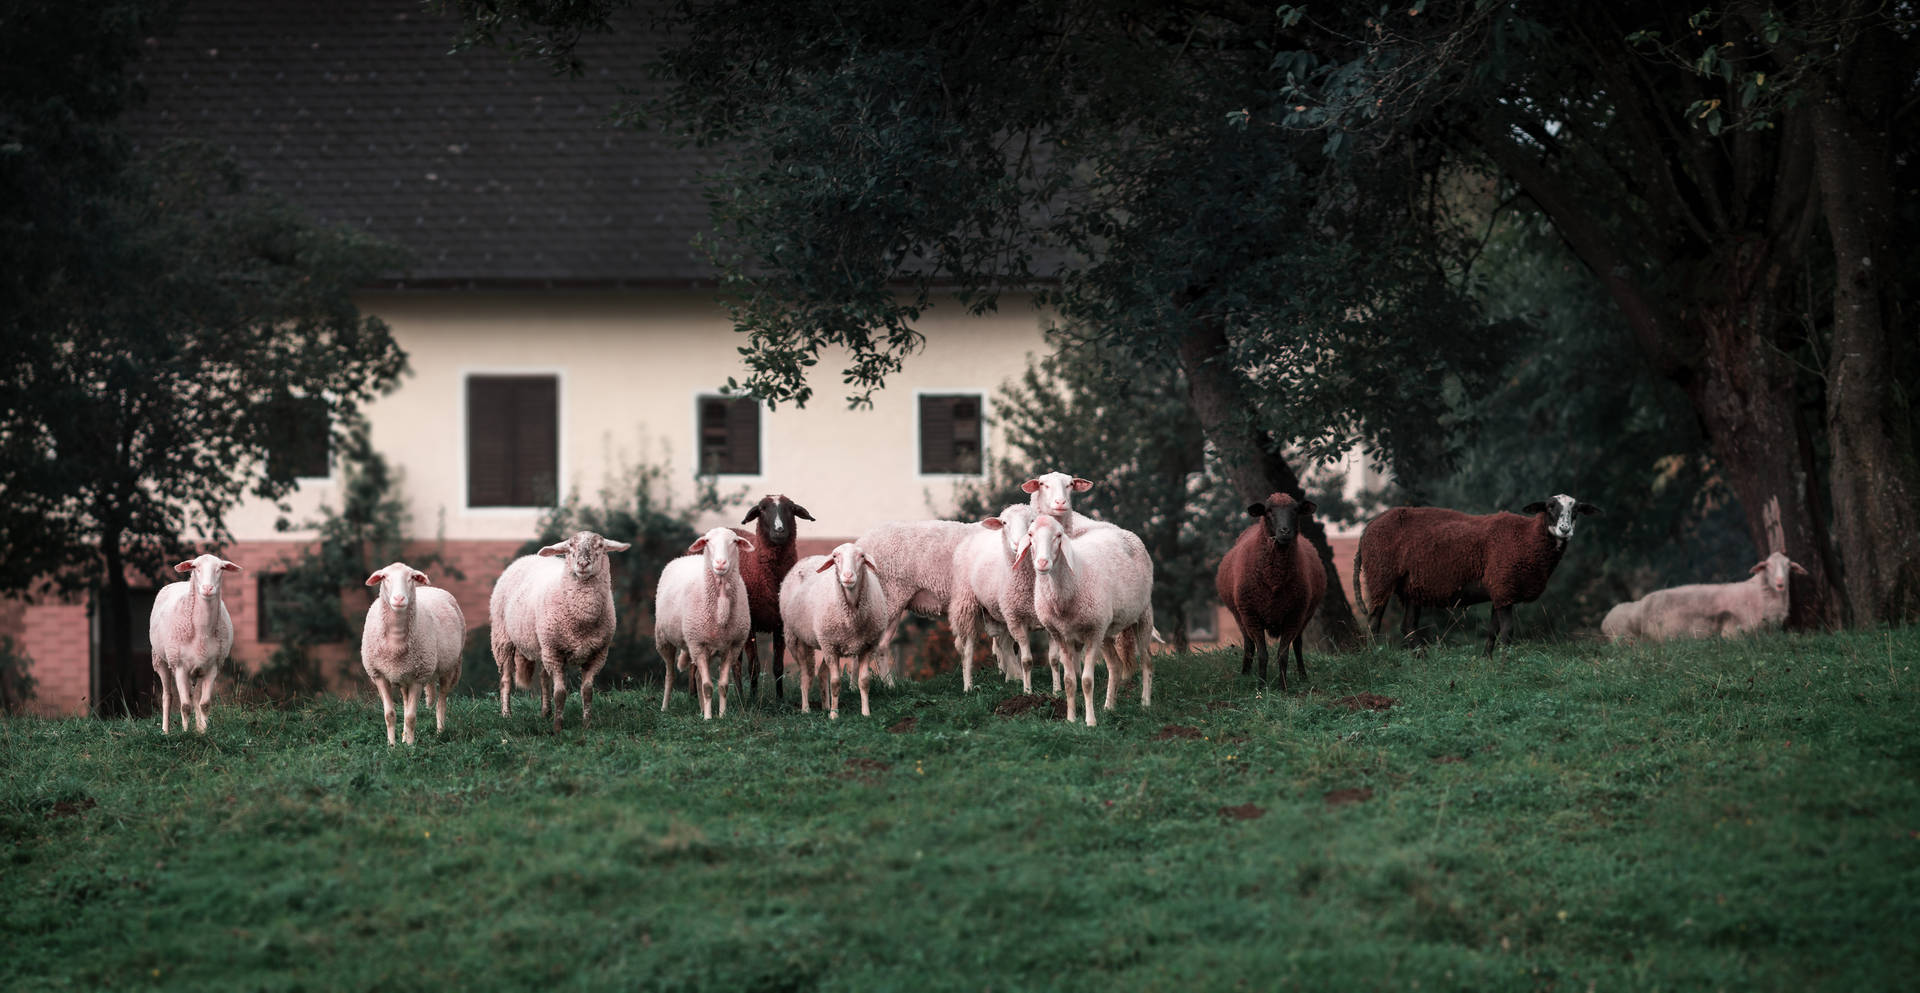 Herd Of Sheep In Backyard Background